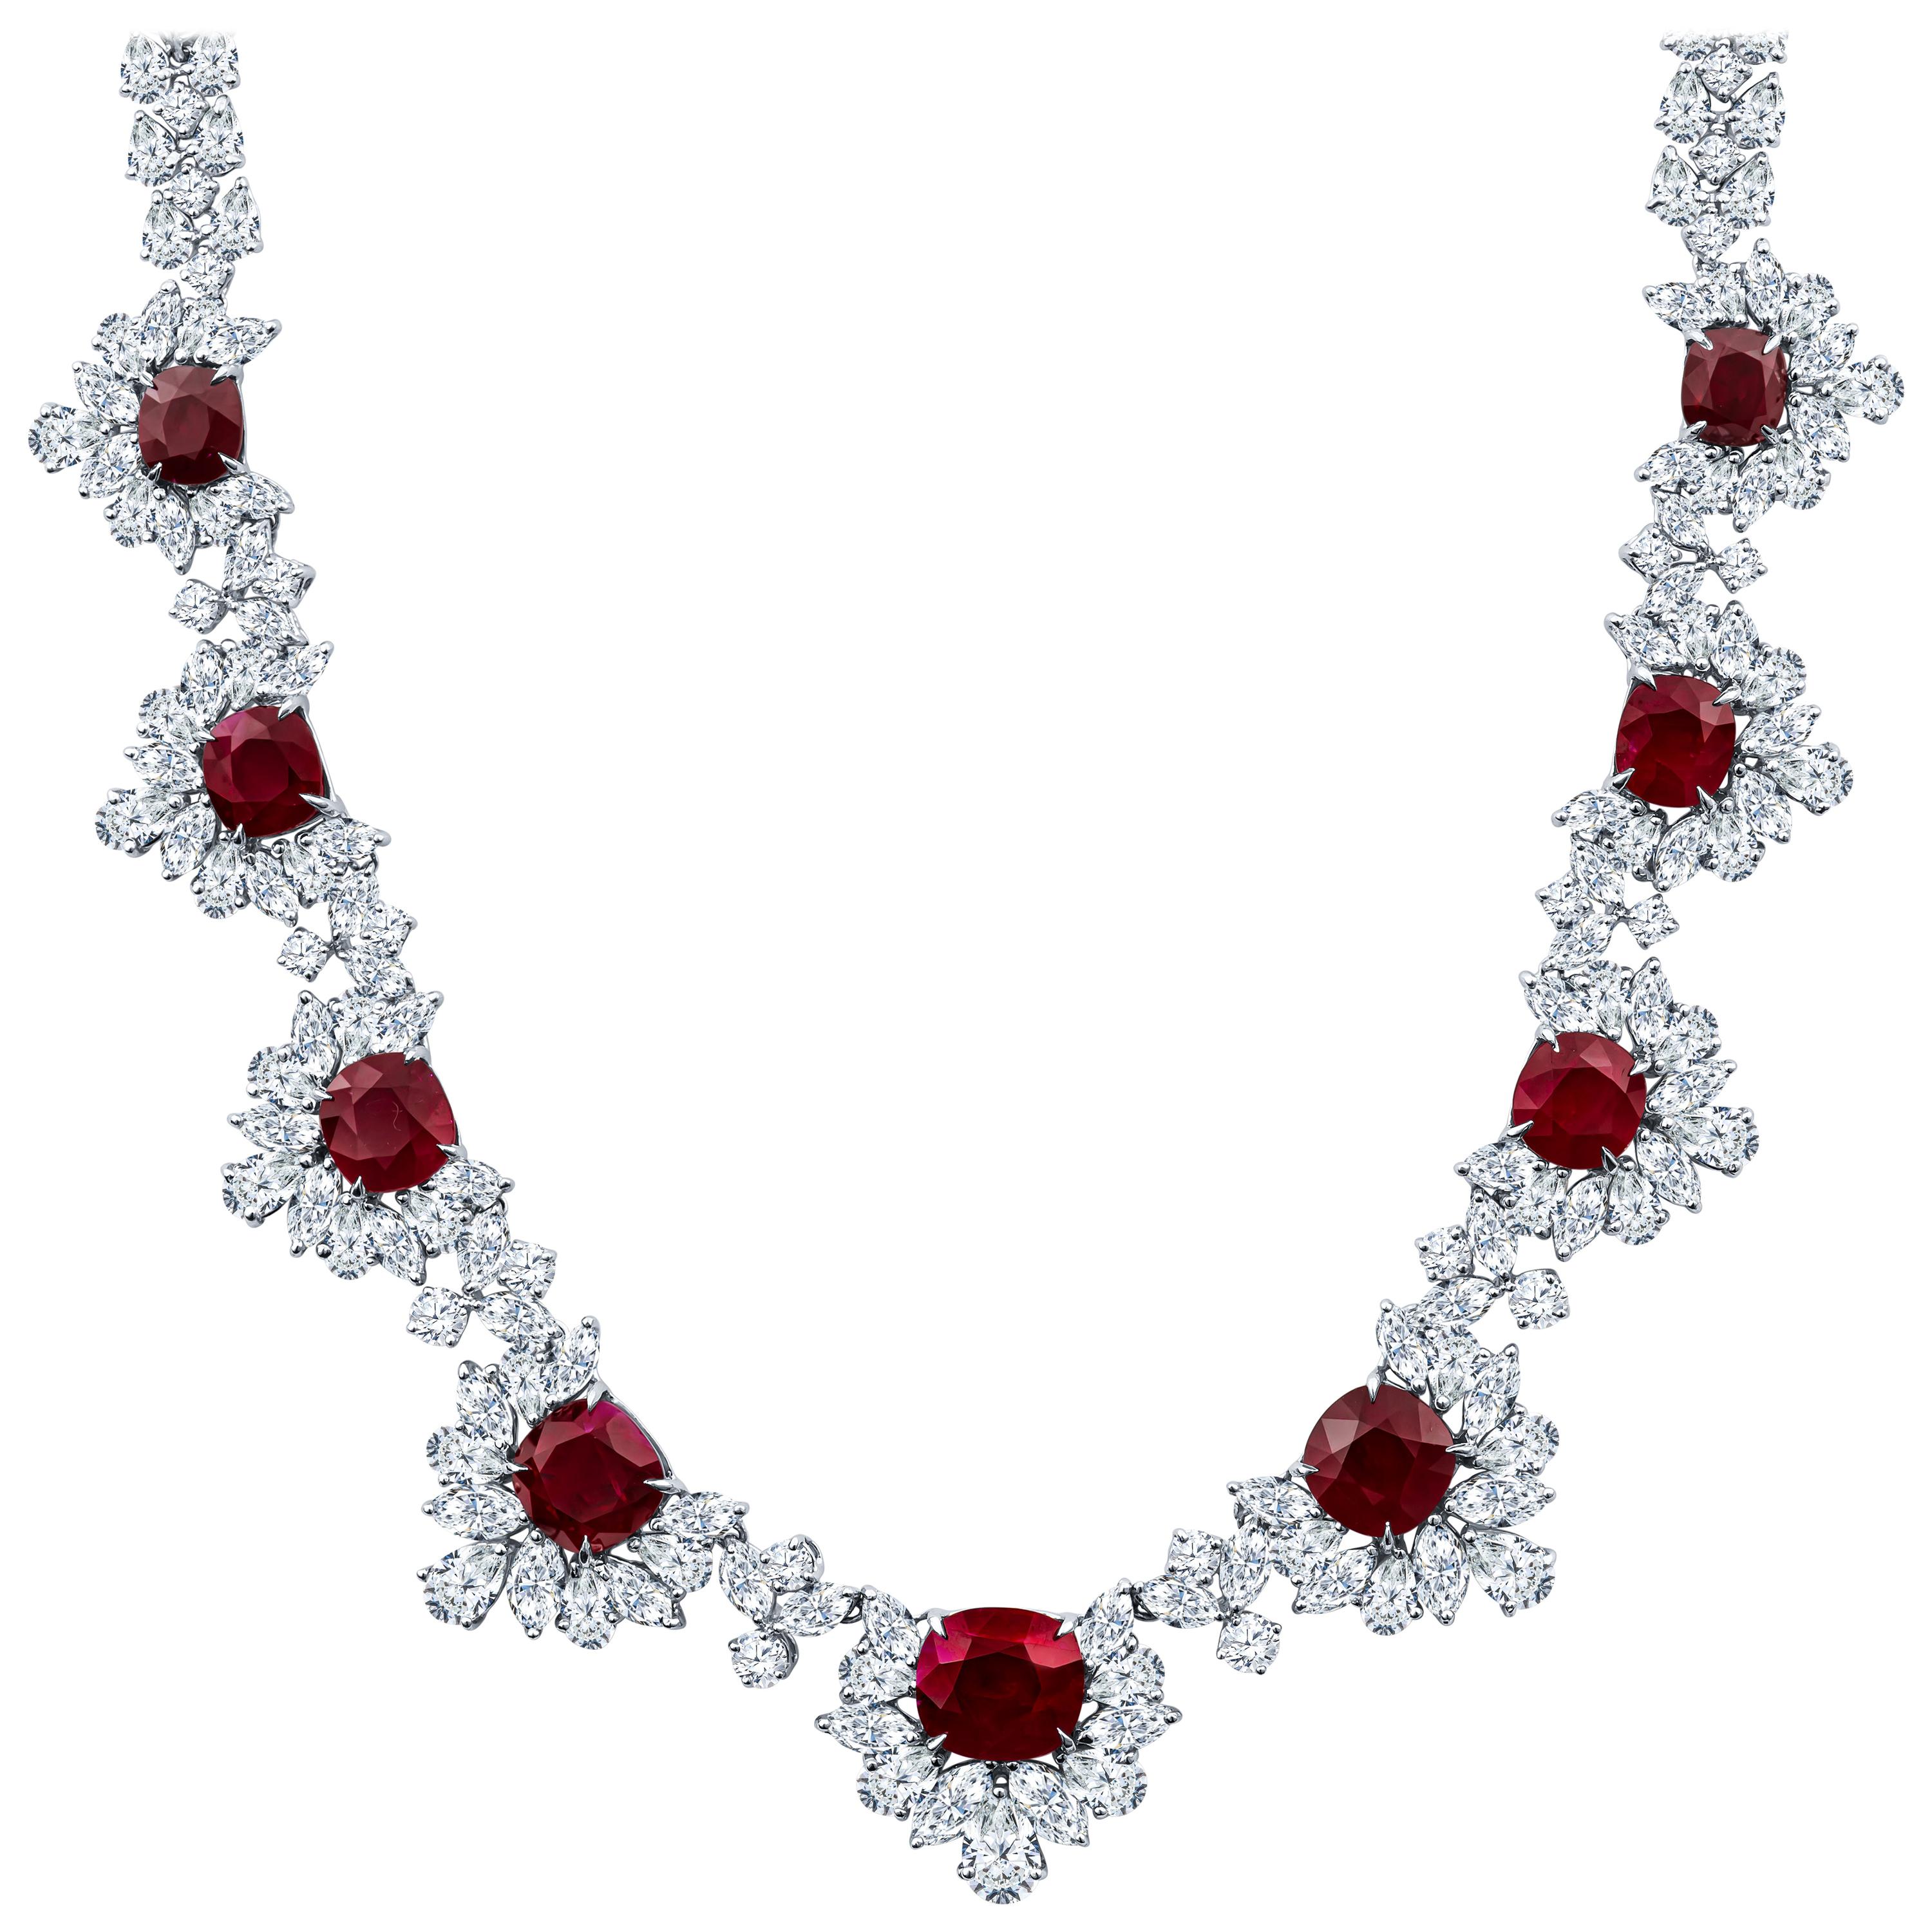 39.74 Carat Burma Ruby and 49.56 Carat Diamond Floral Necklace in Platinum